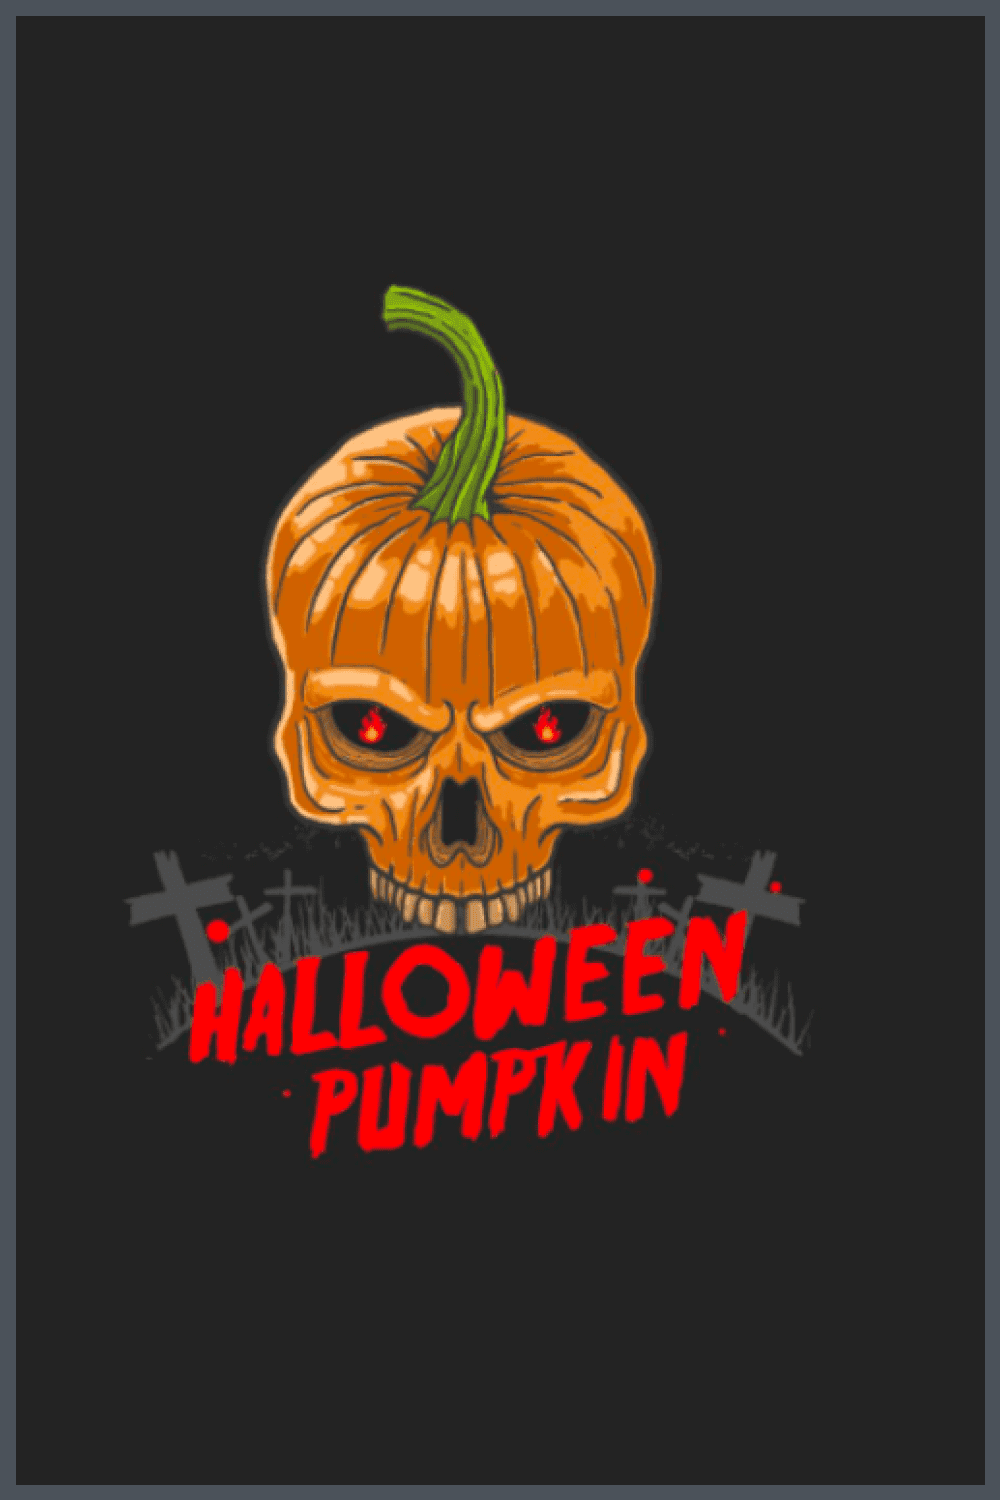 A narrow but evil pumpkin just right for Halloween.